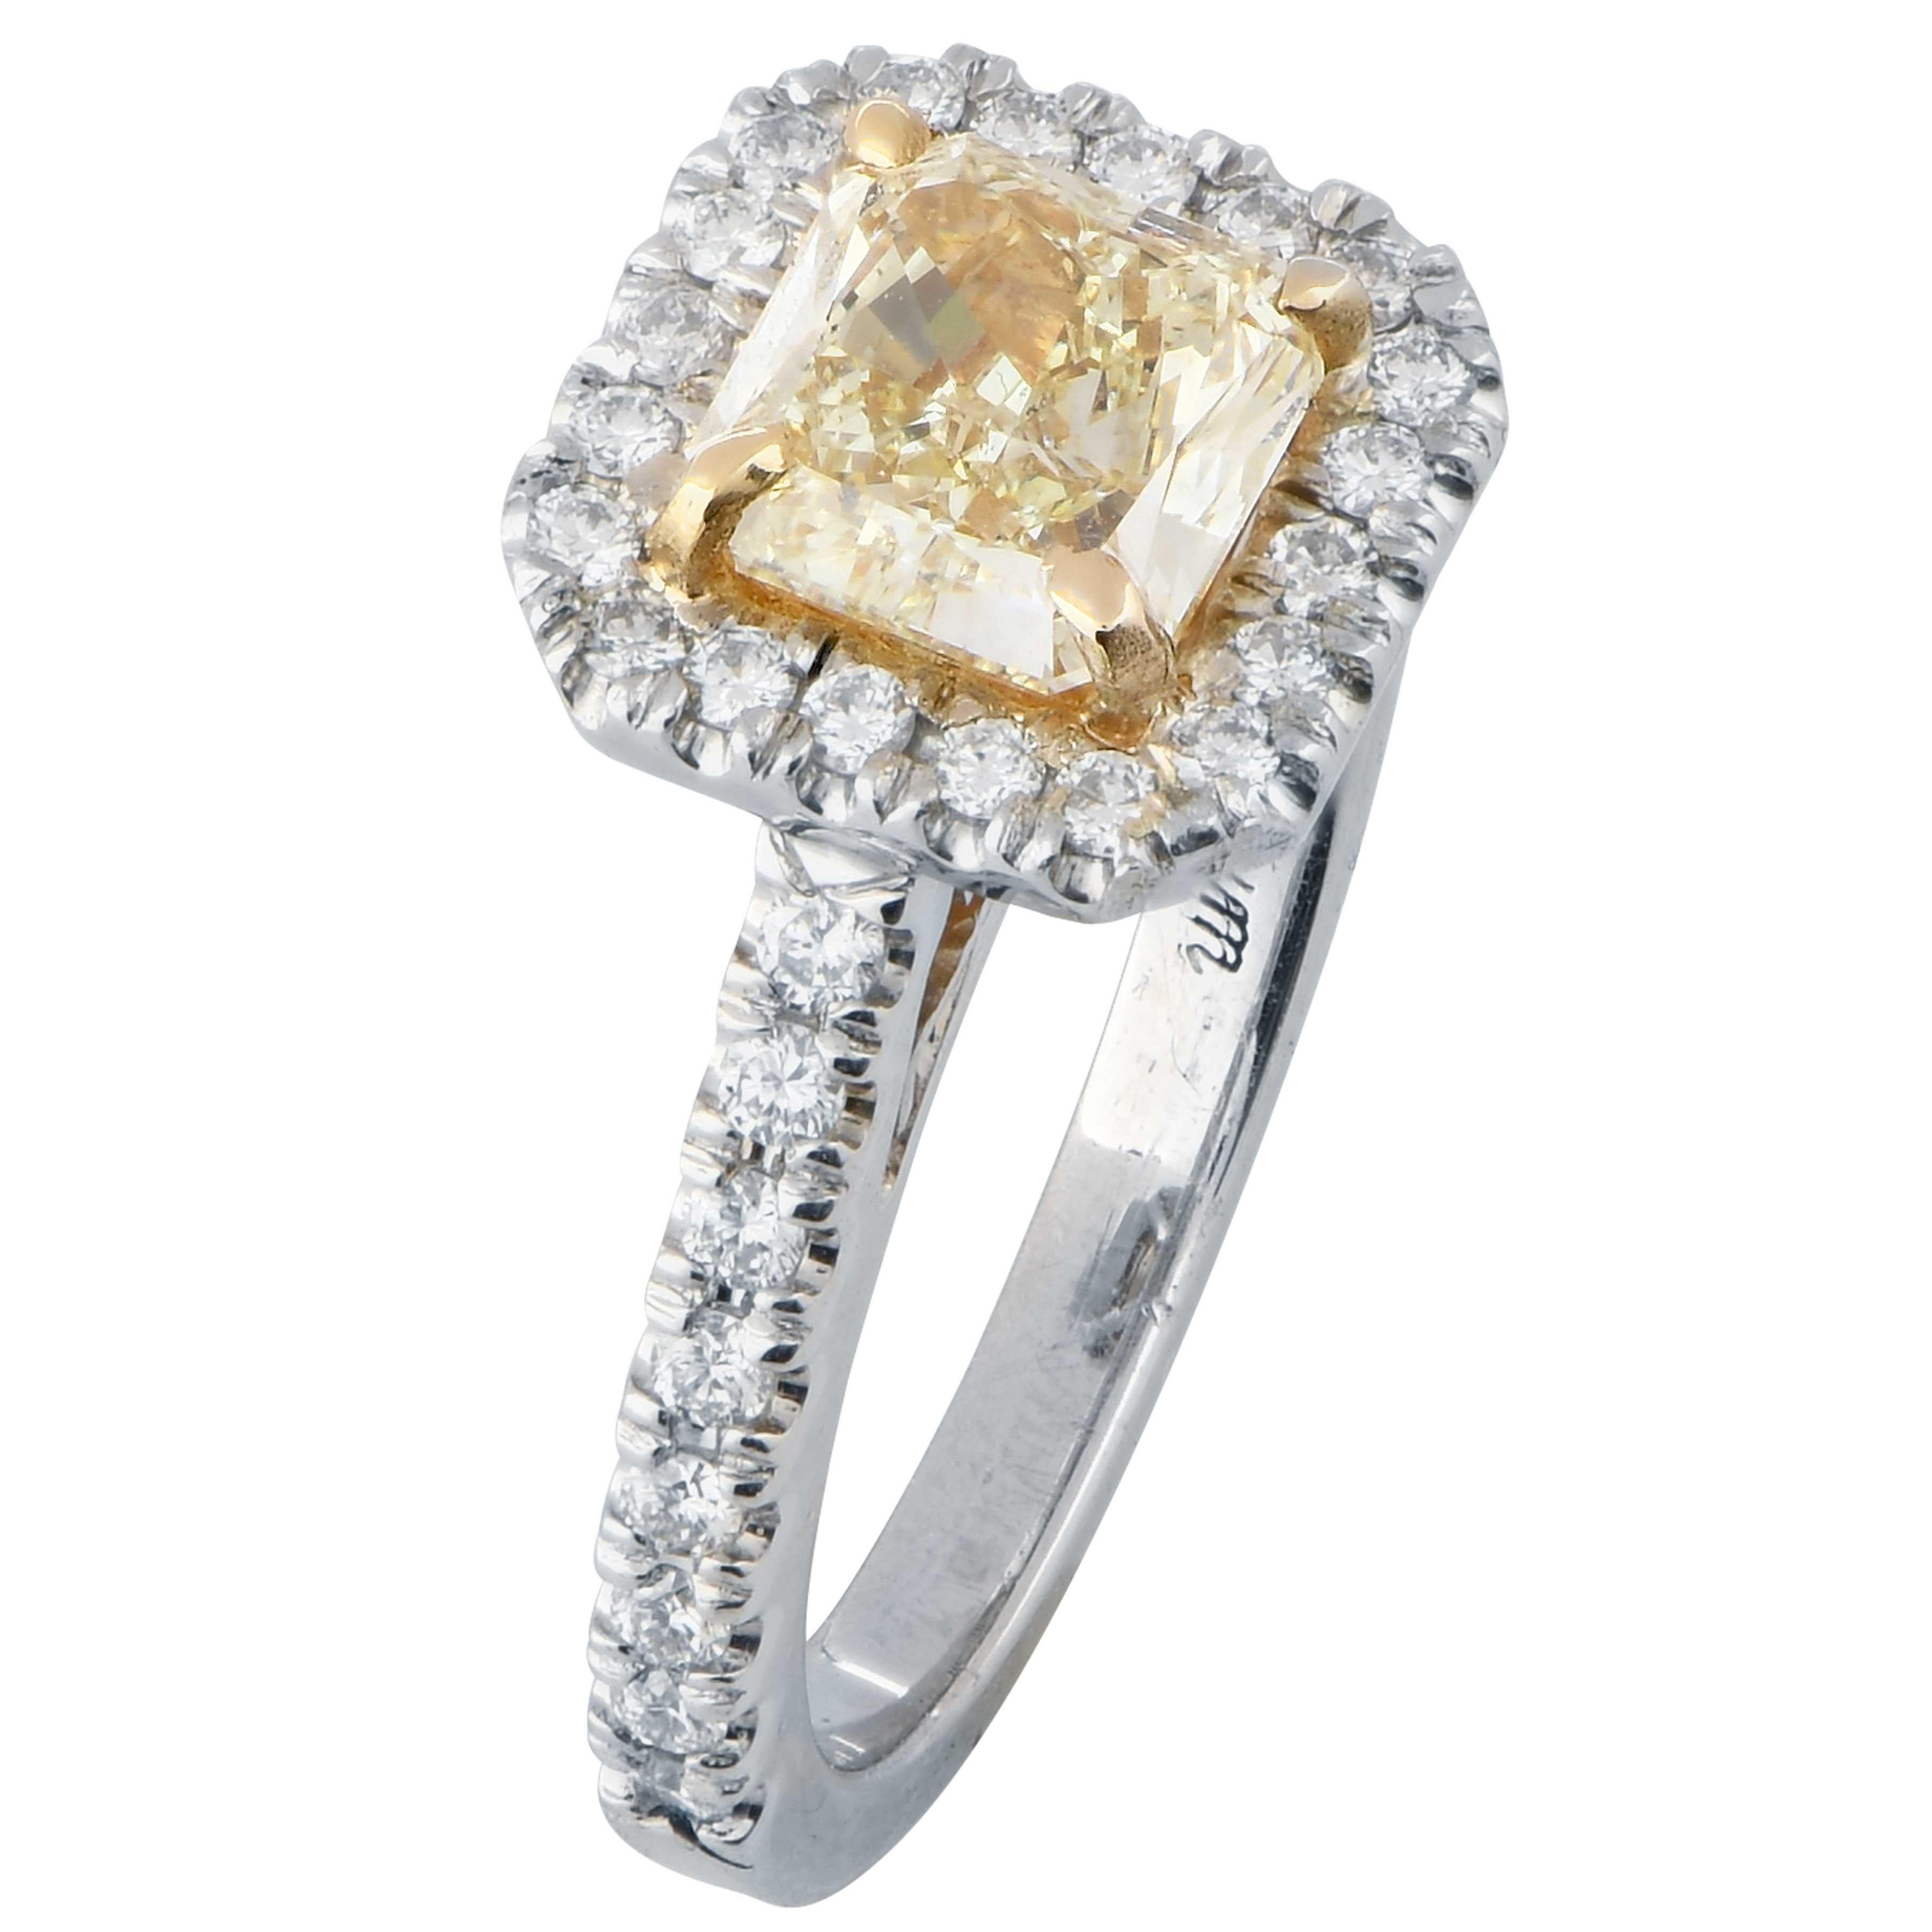 Modern 1.38 Carat Radiant Cut Yellow Diamond in Platinum Engagement Ring